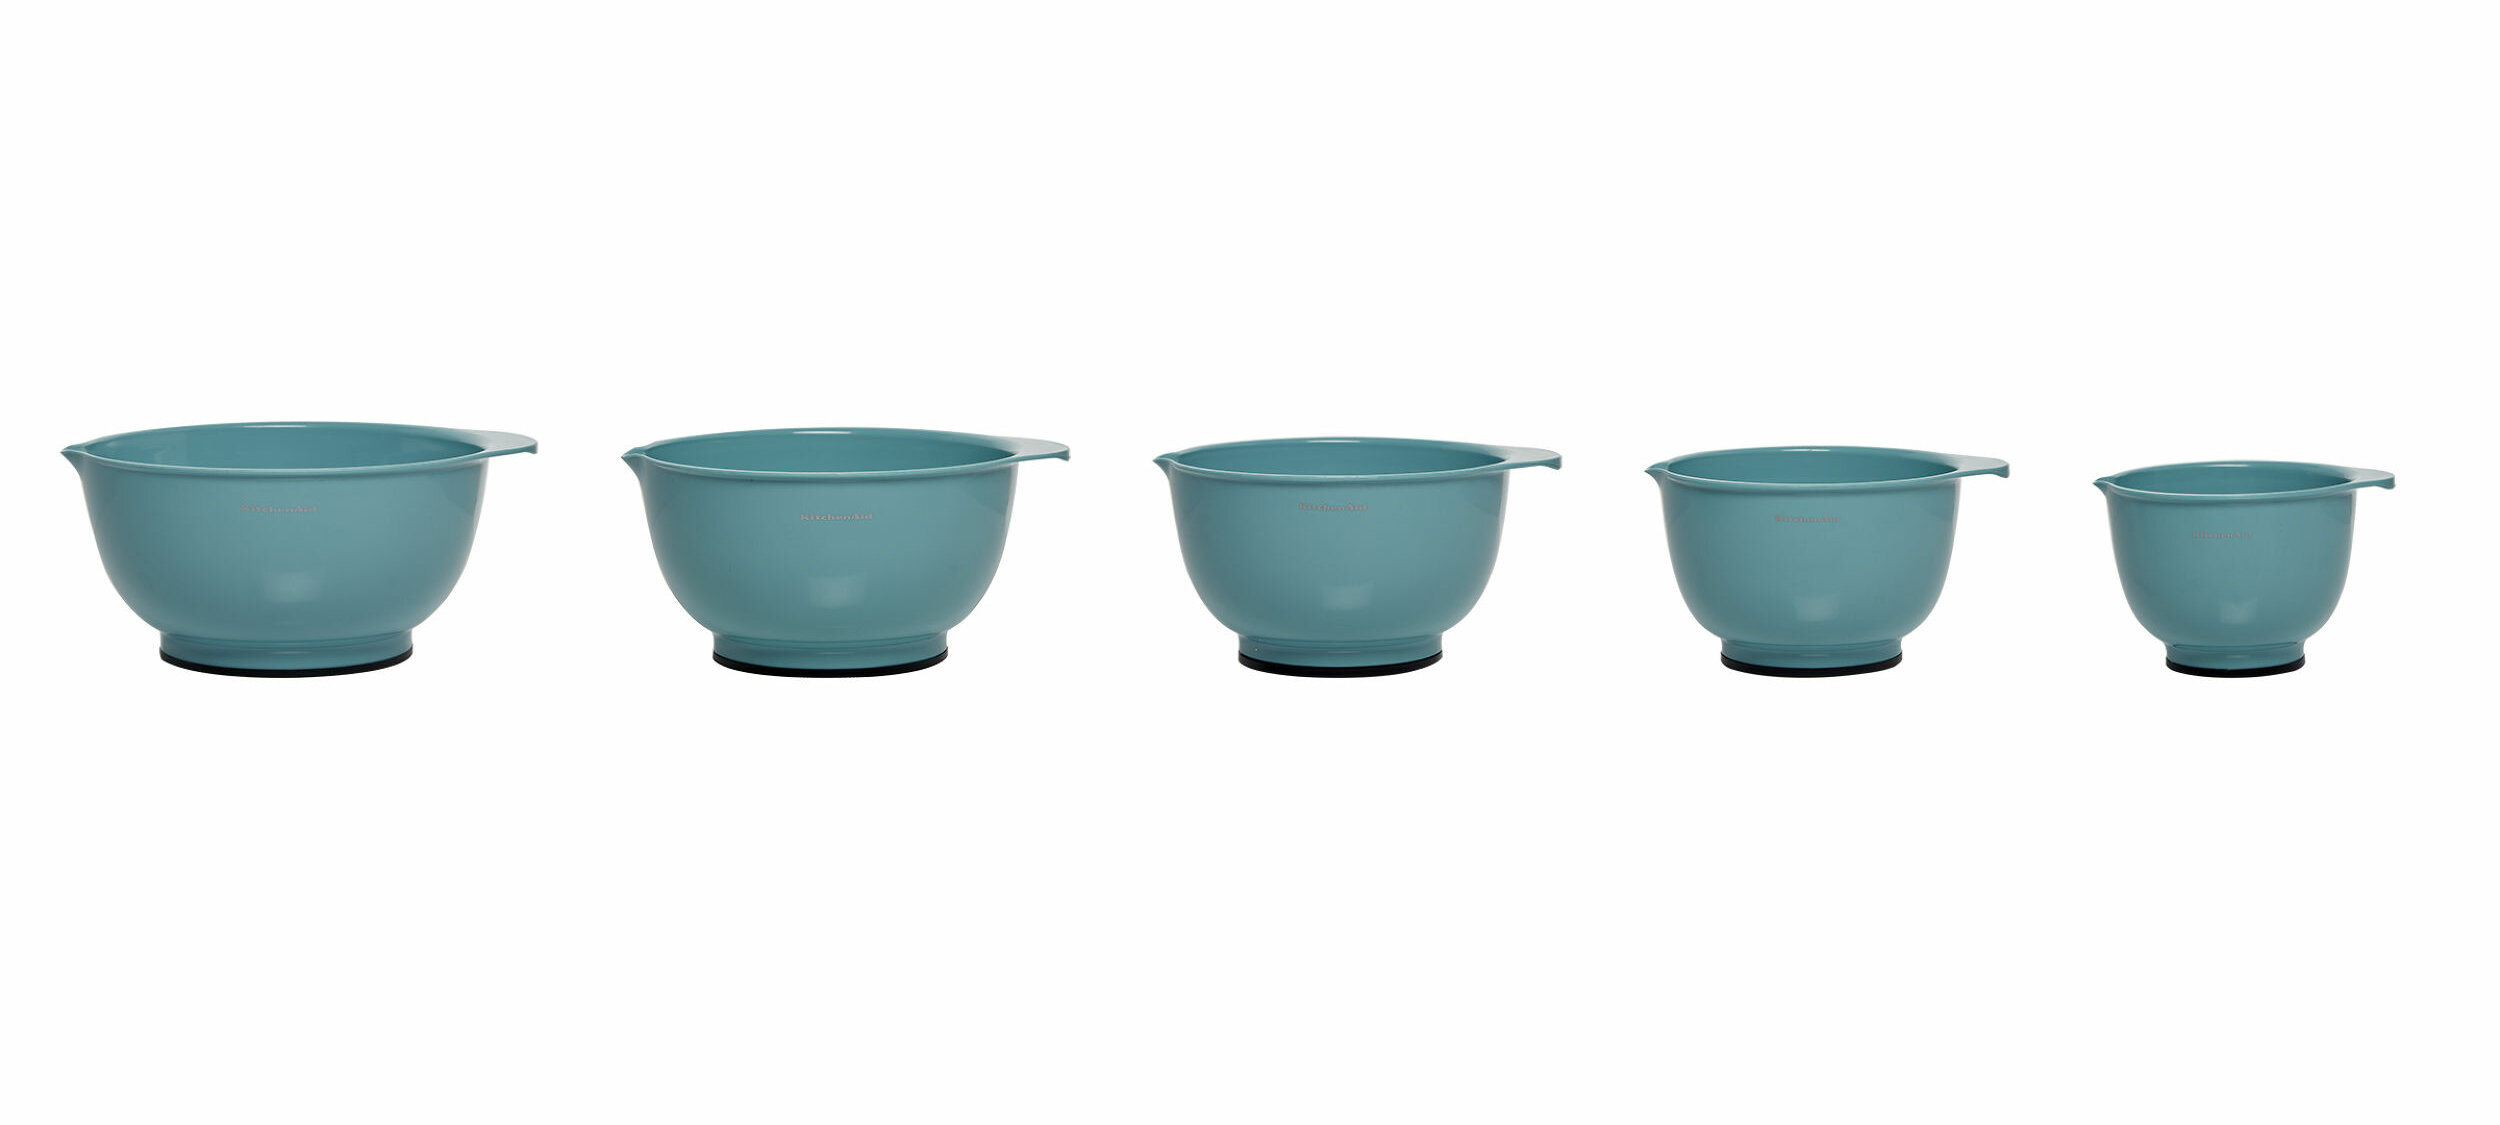 Godinger godinger mixing bowls with lids, plastic nesting bowls set, storage  bowls, microwave safe mixing bowl set, 3 bowls 3 lids